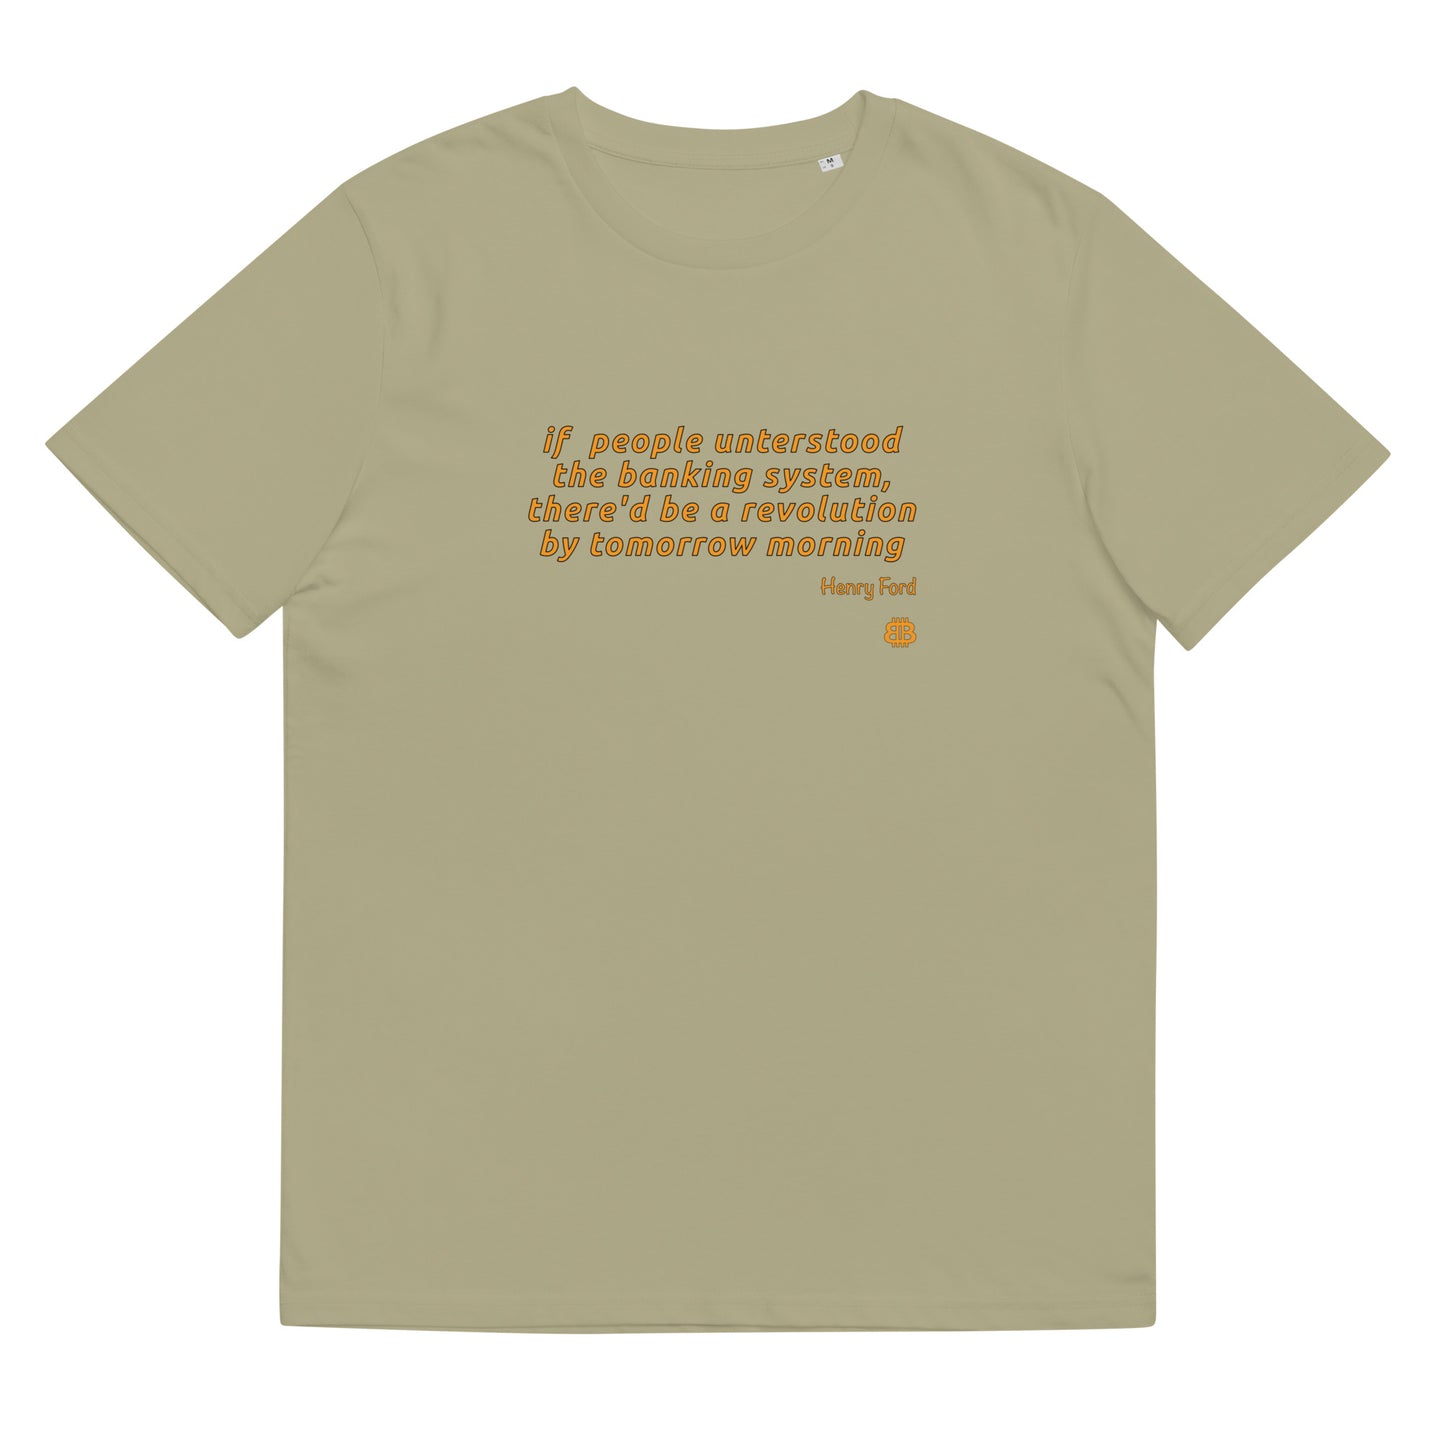 Men's organic cotton t-shirt "Revolution_engl"